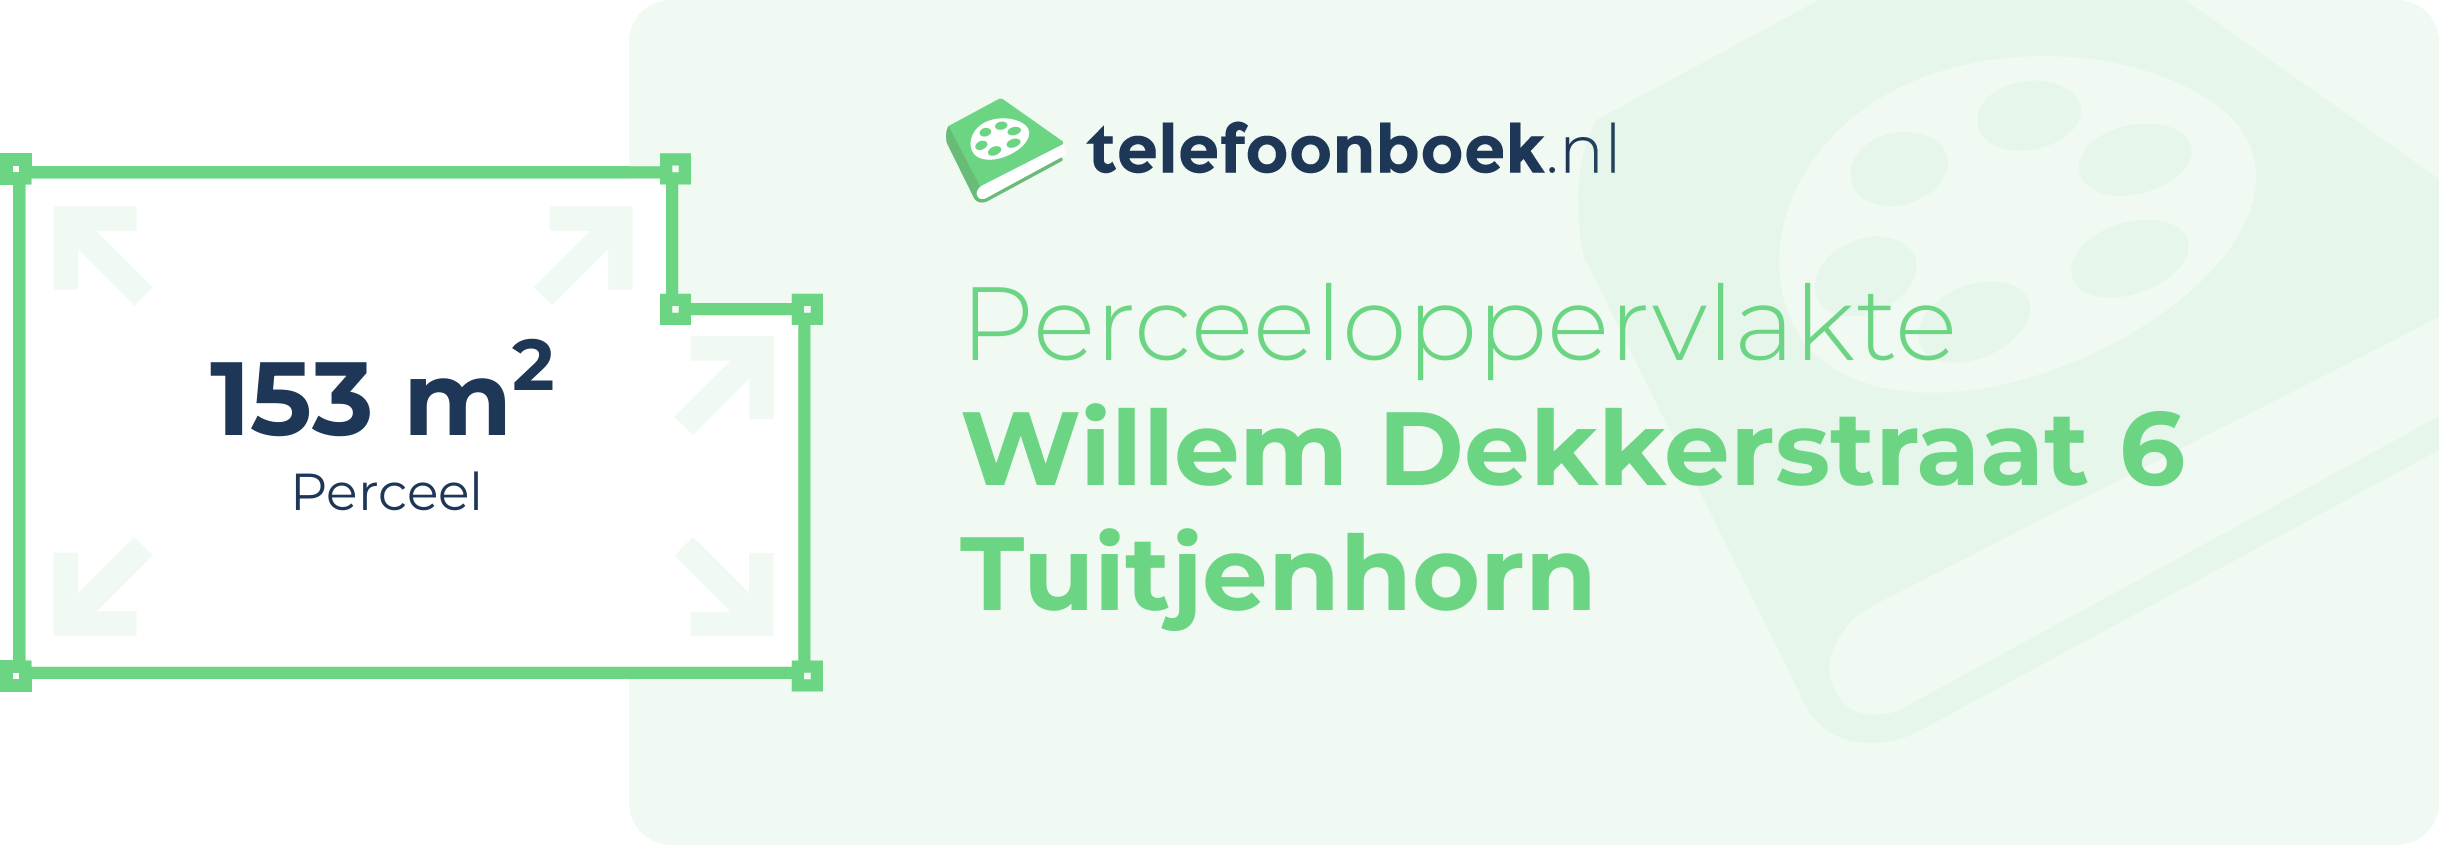 Perceeloppervlakte Willem Dekkerstraat 6 Tuitjenhorn